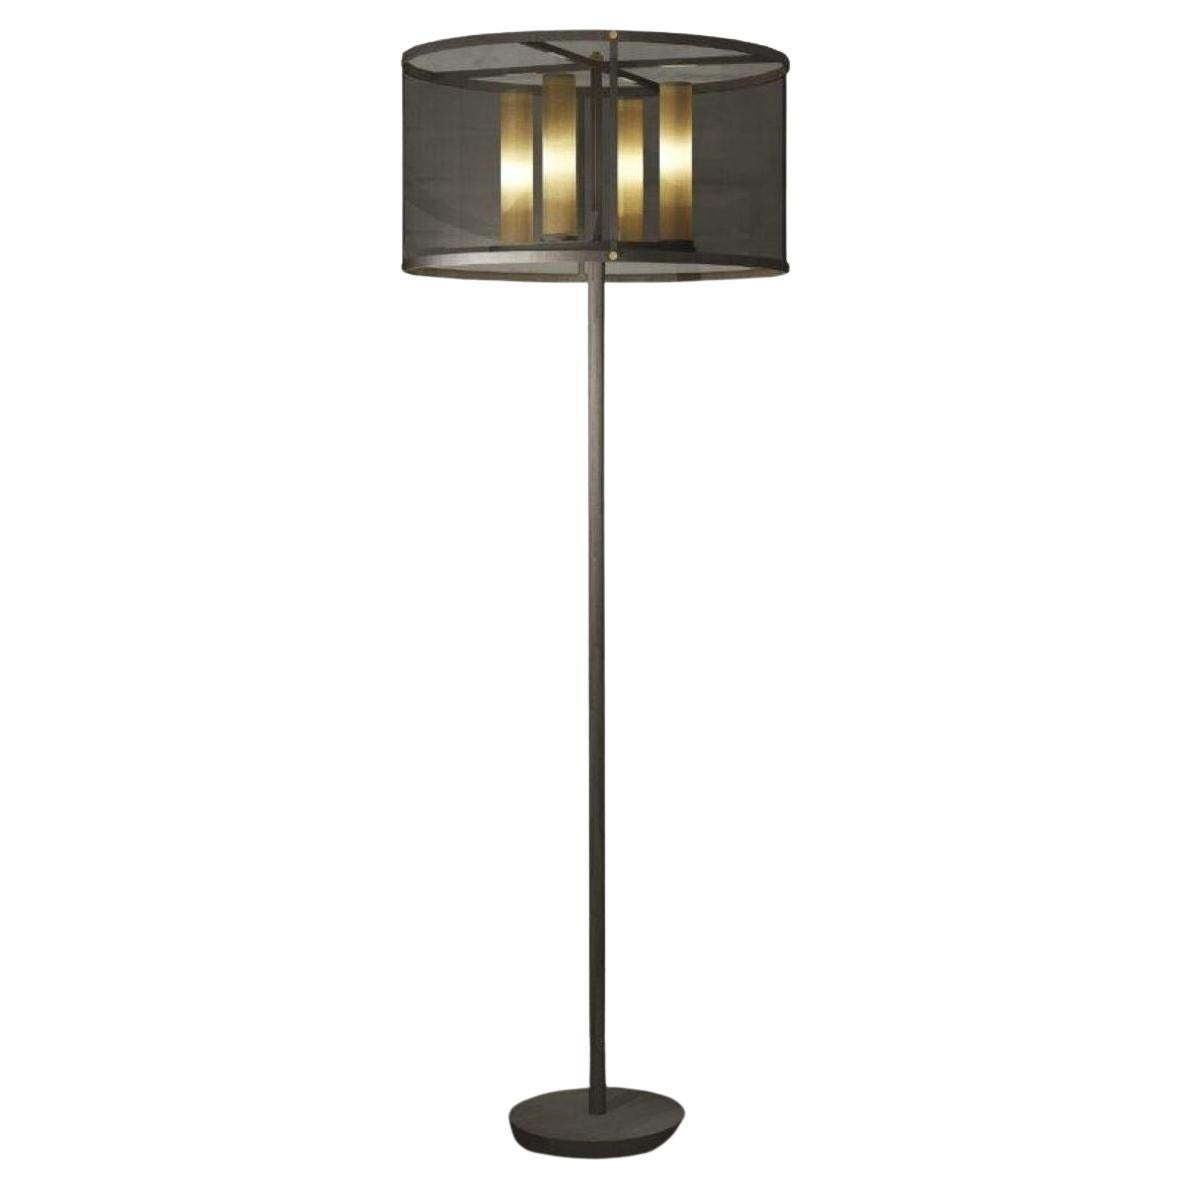 Imagin Industrial Floor Lamp in Antique Bronze and Antique Brass For Sale